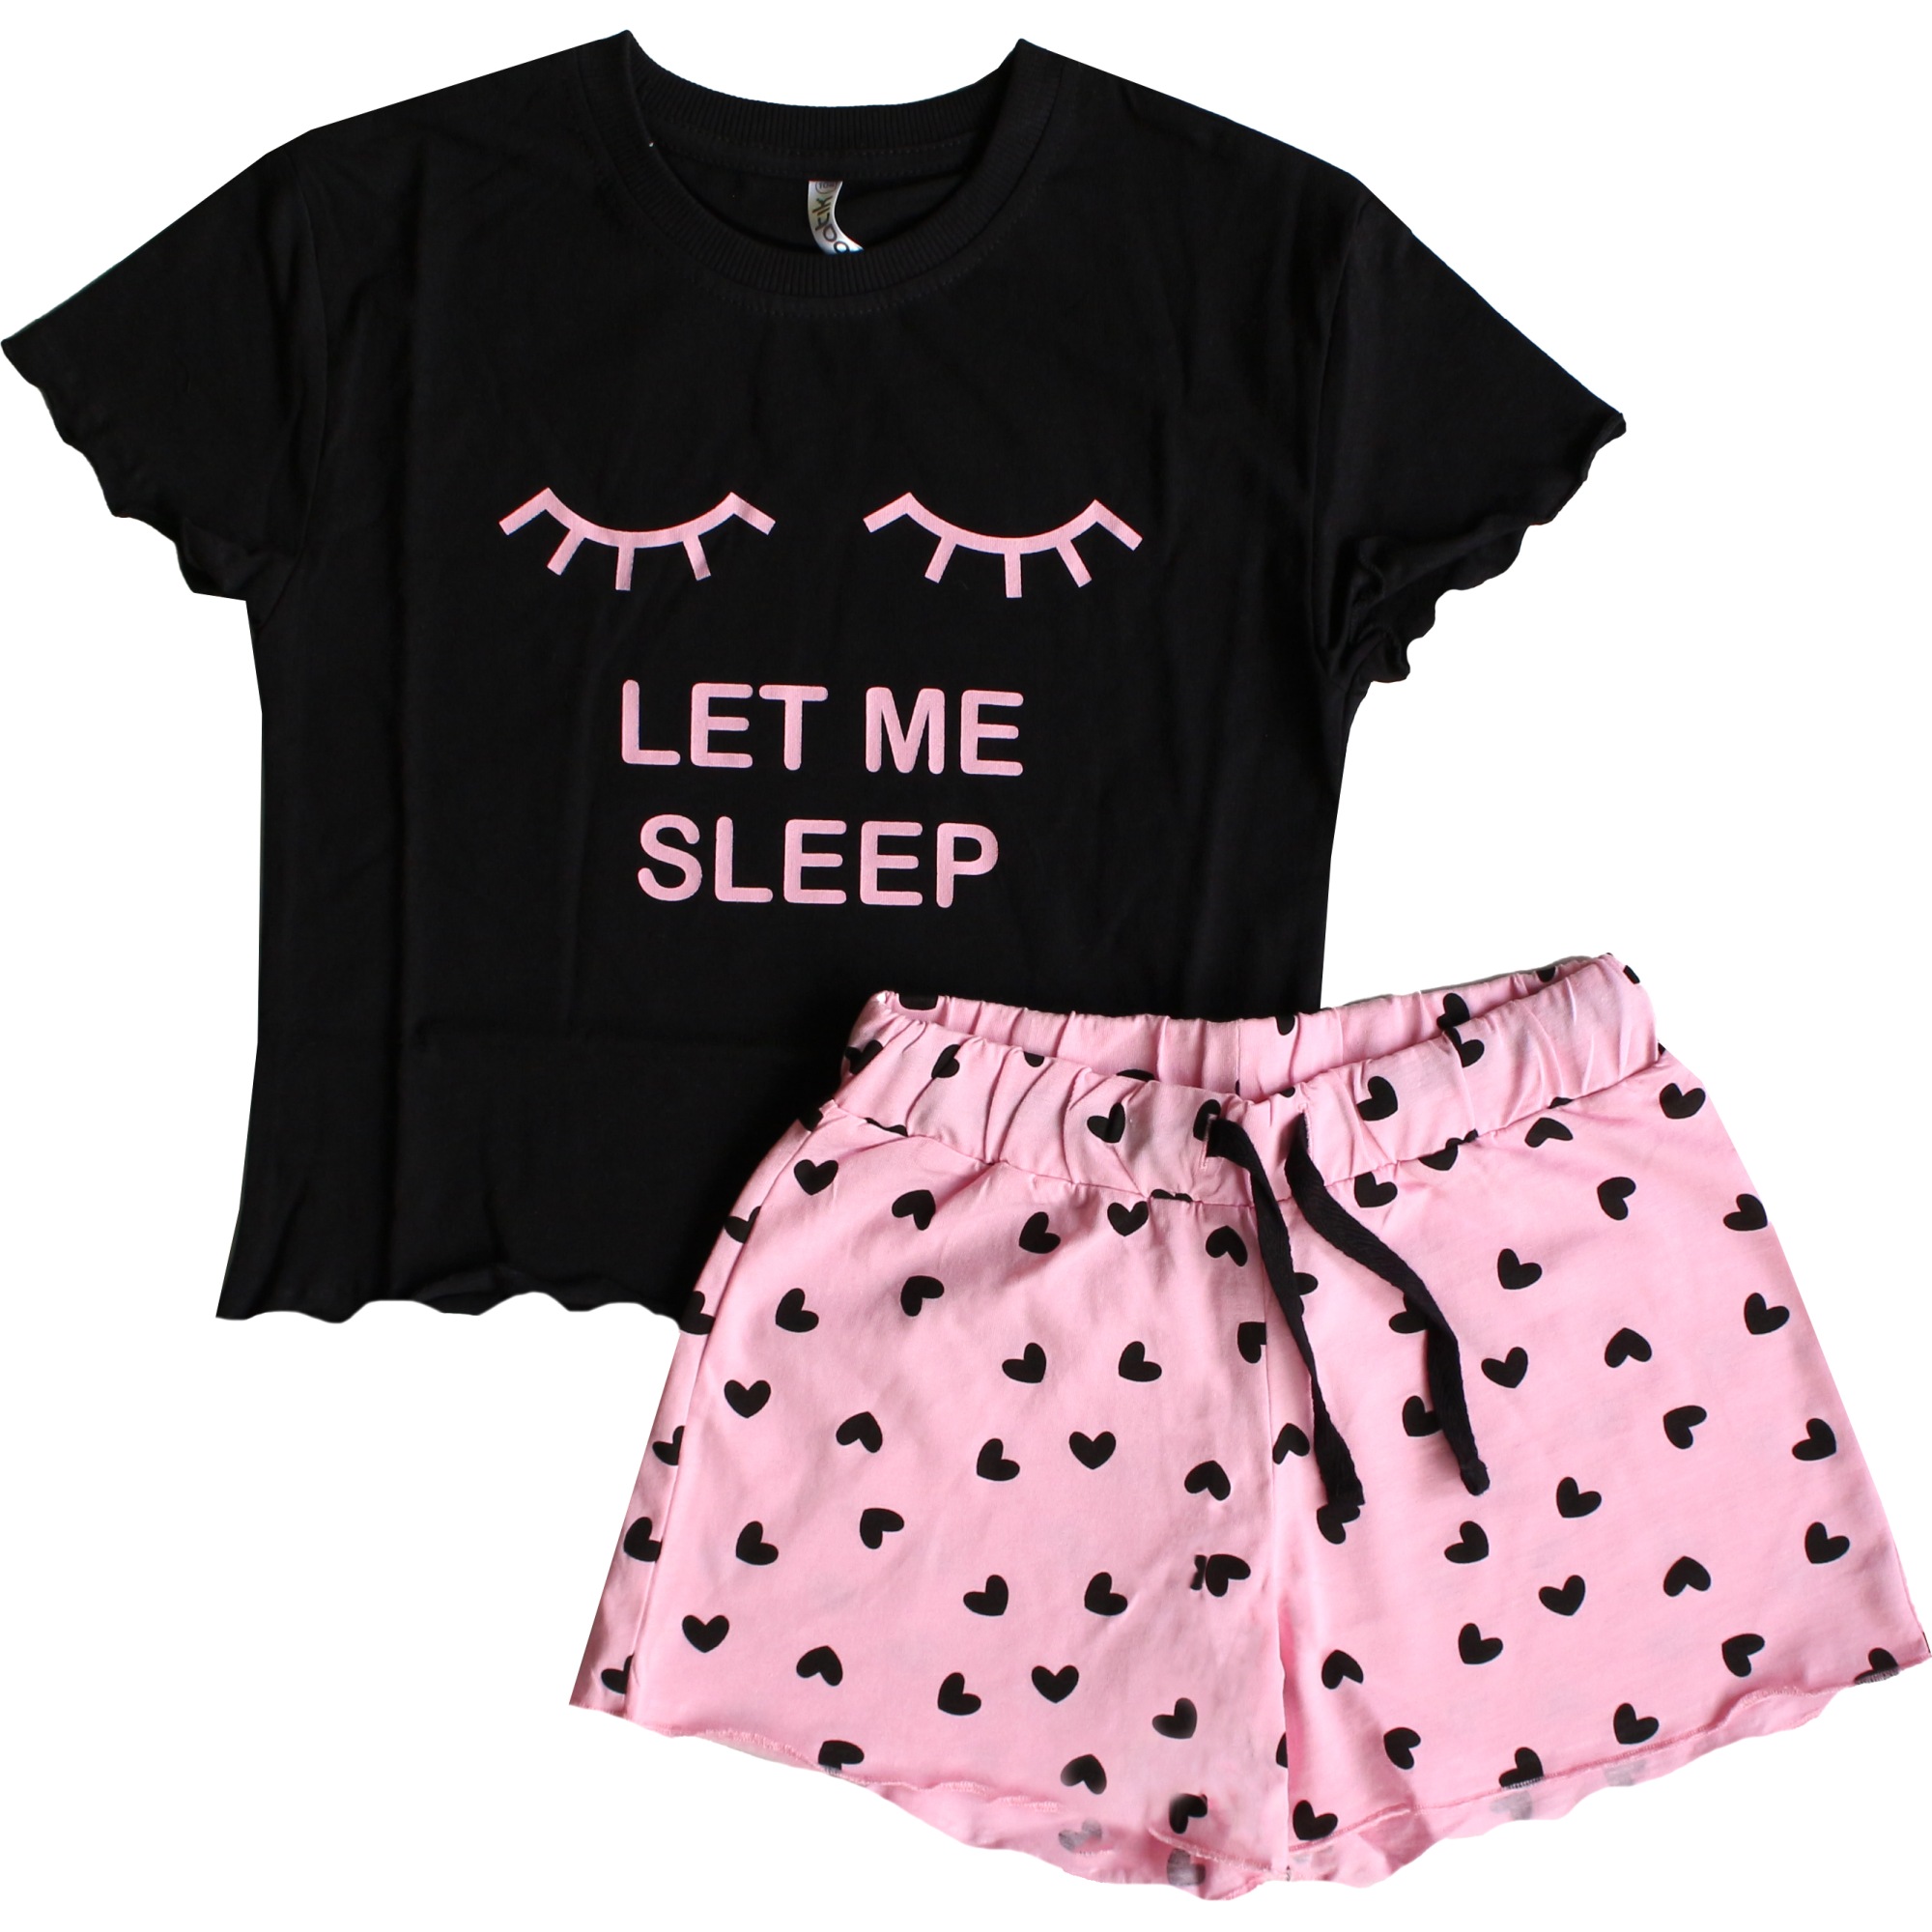 Пижама д/д 104 LET ME SLEEP футболка +шорты черный/розовый 001_ОП23